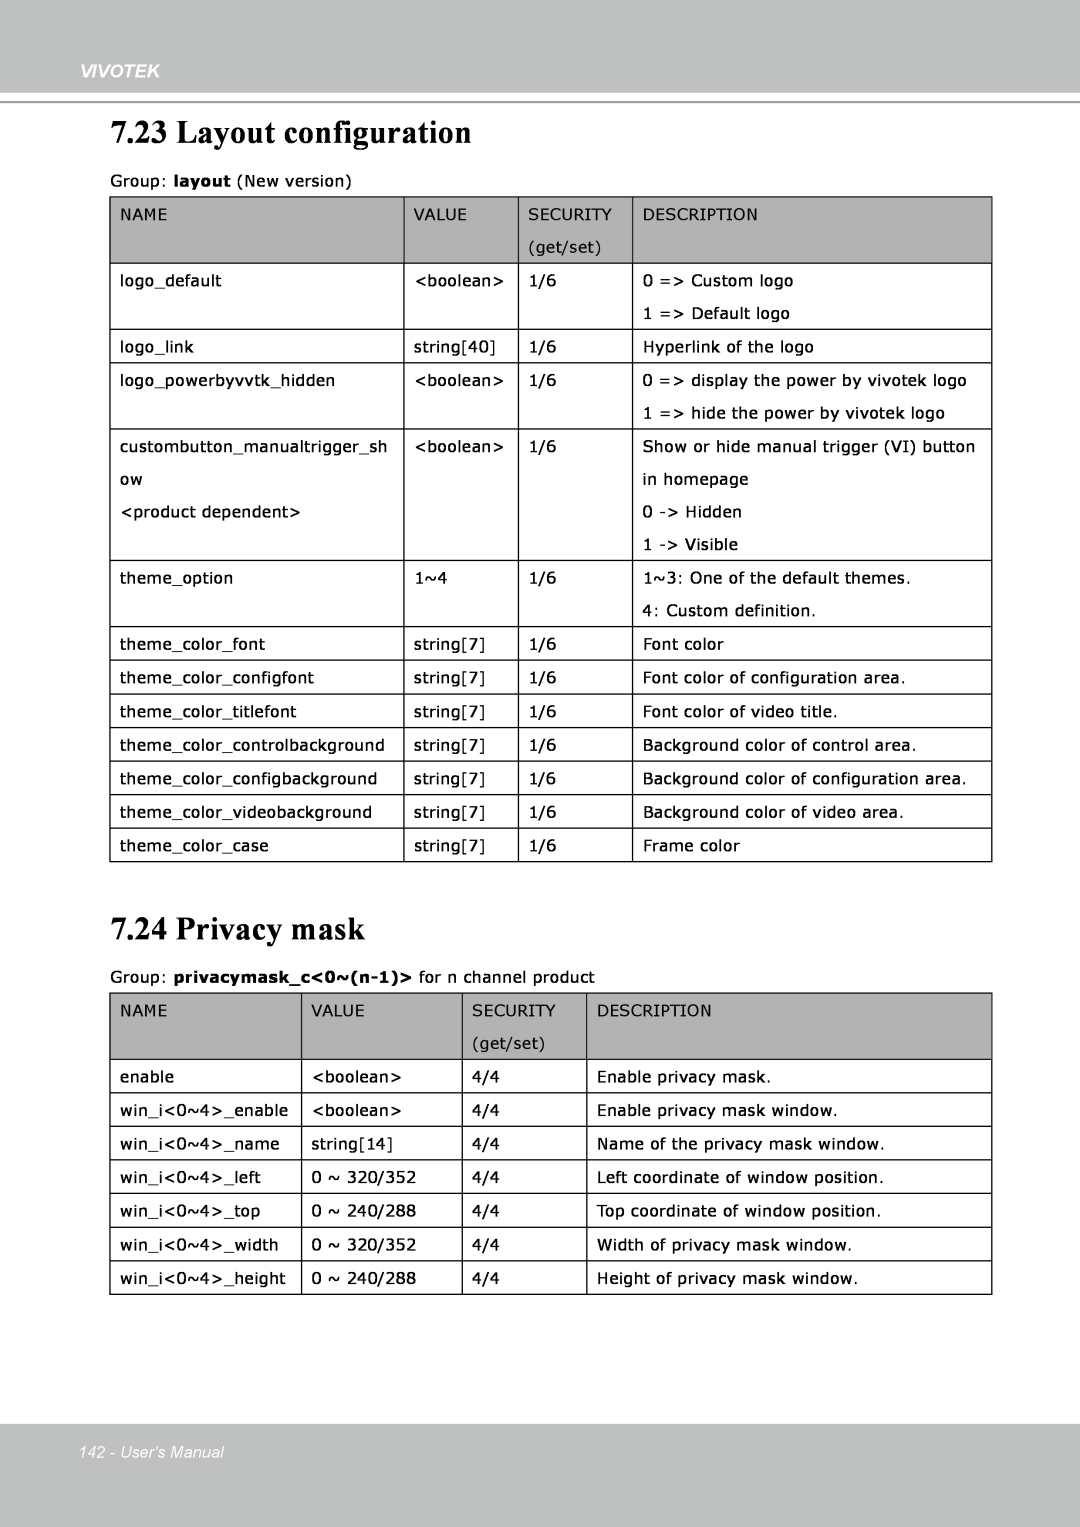 Vivotek IP8151 manual Layout configuration, Privacy mask, Vivotek, Users Manual 